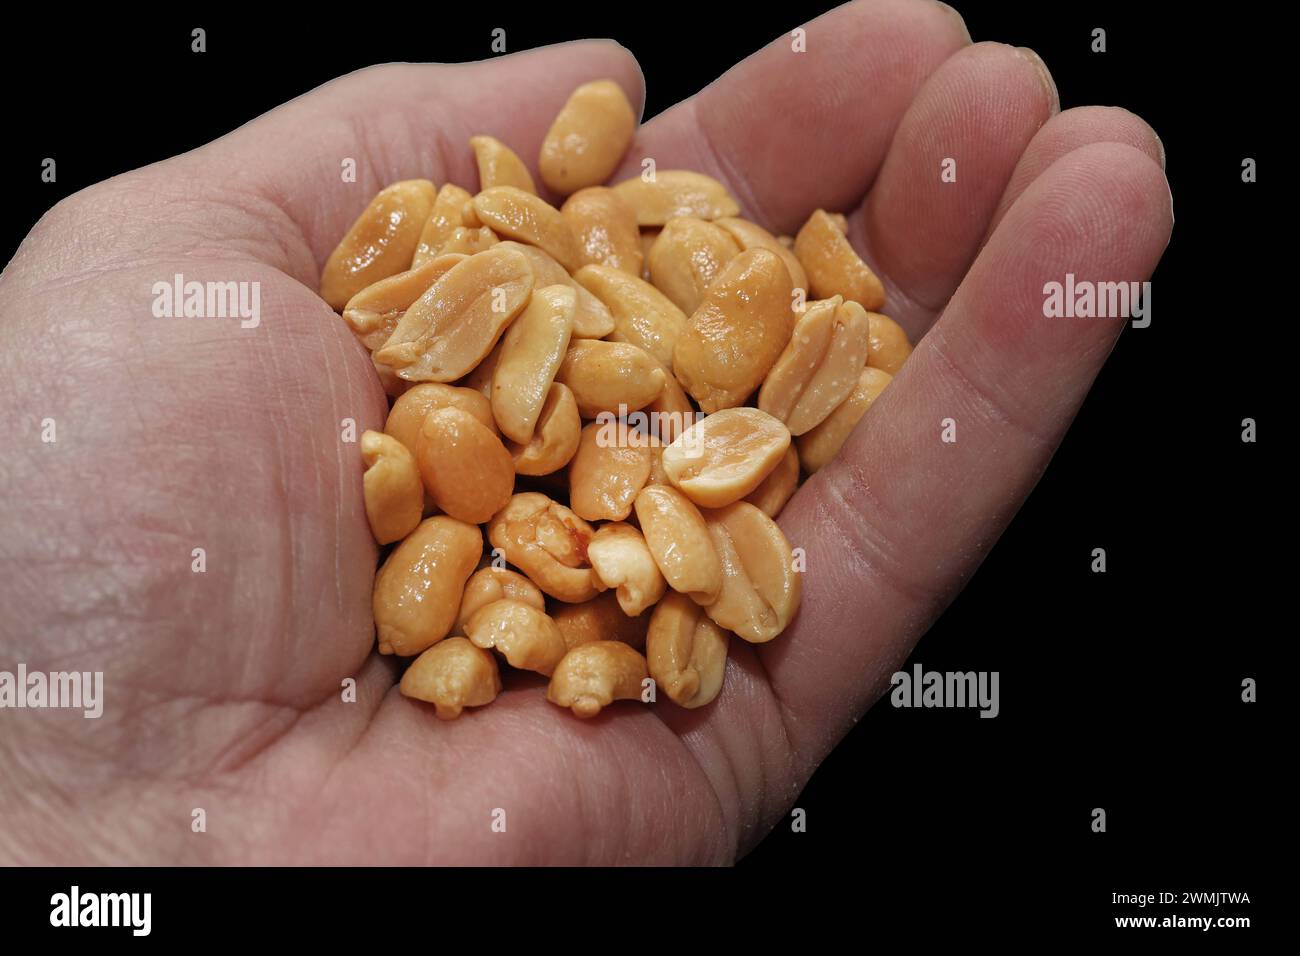 Erdnüsse als Snack BEARBEITET: Gesalzene und geröstete Erdnüsse mit hohem Fettgehalt als Snack *** Peanuts as a snack PROCESSED Salted and roasted peanuts with a high fat content as a snack Stock Photo